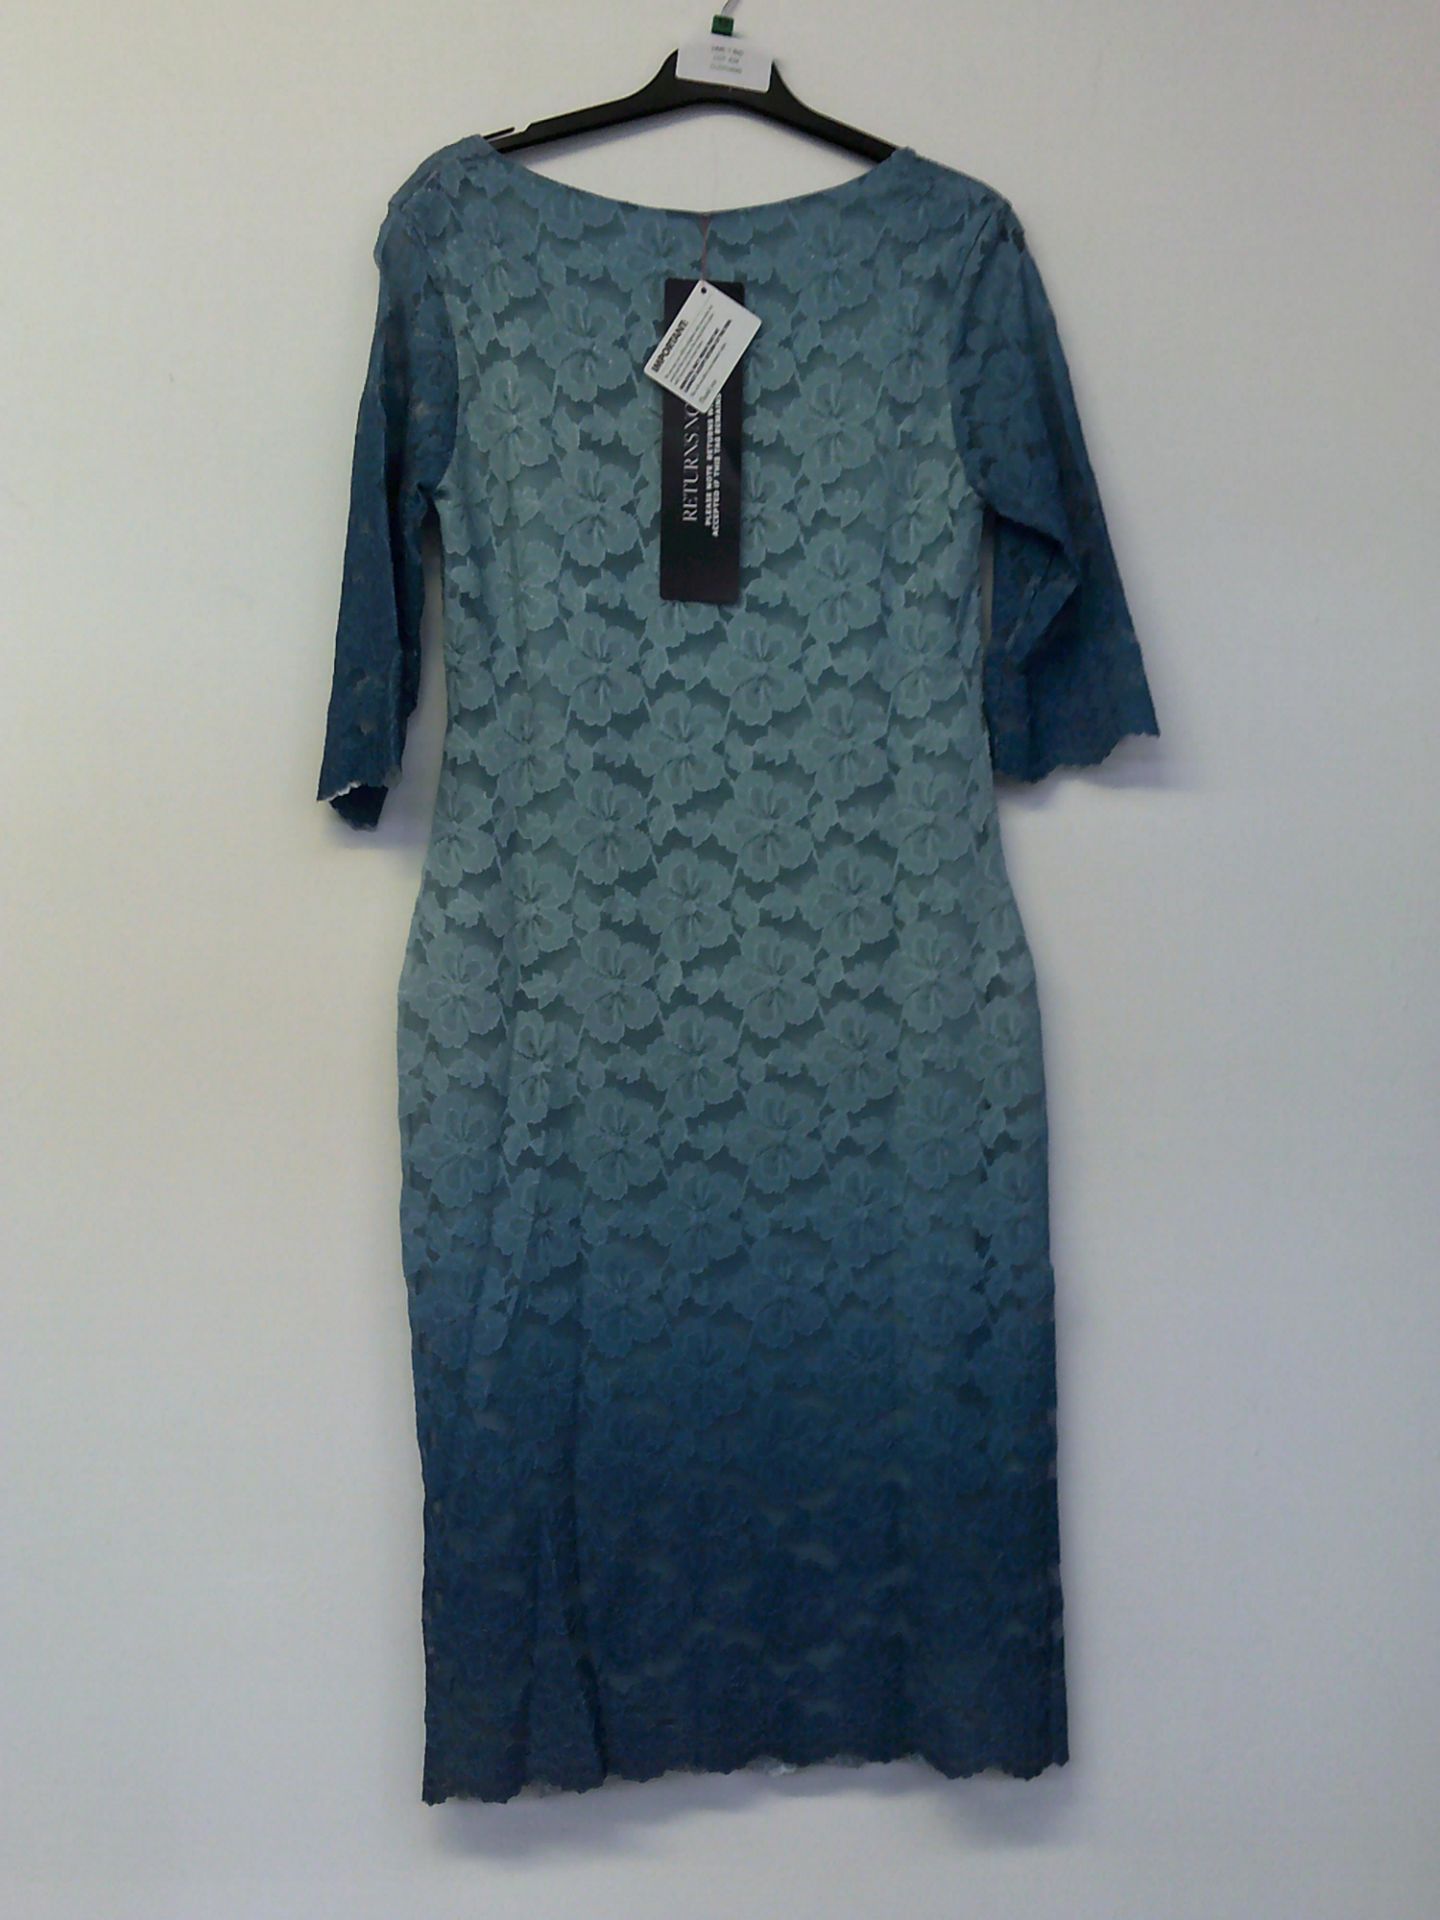 Kaleidoscope Blue Lace Dress Size 12